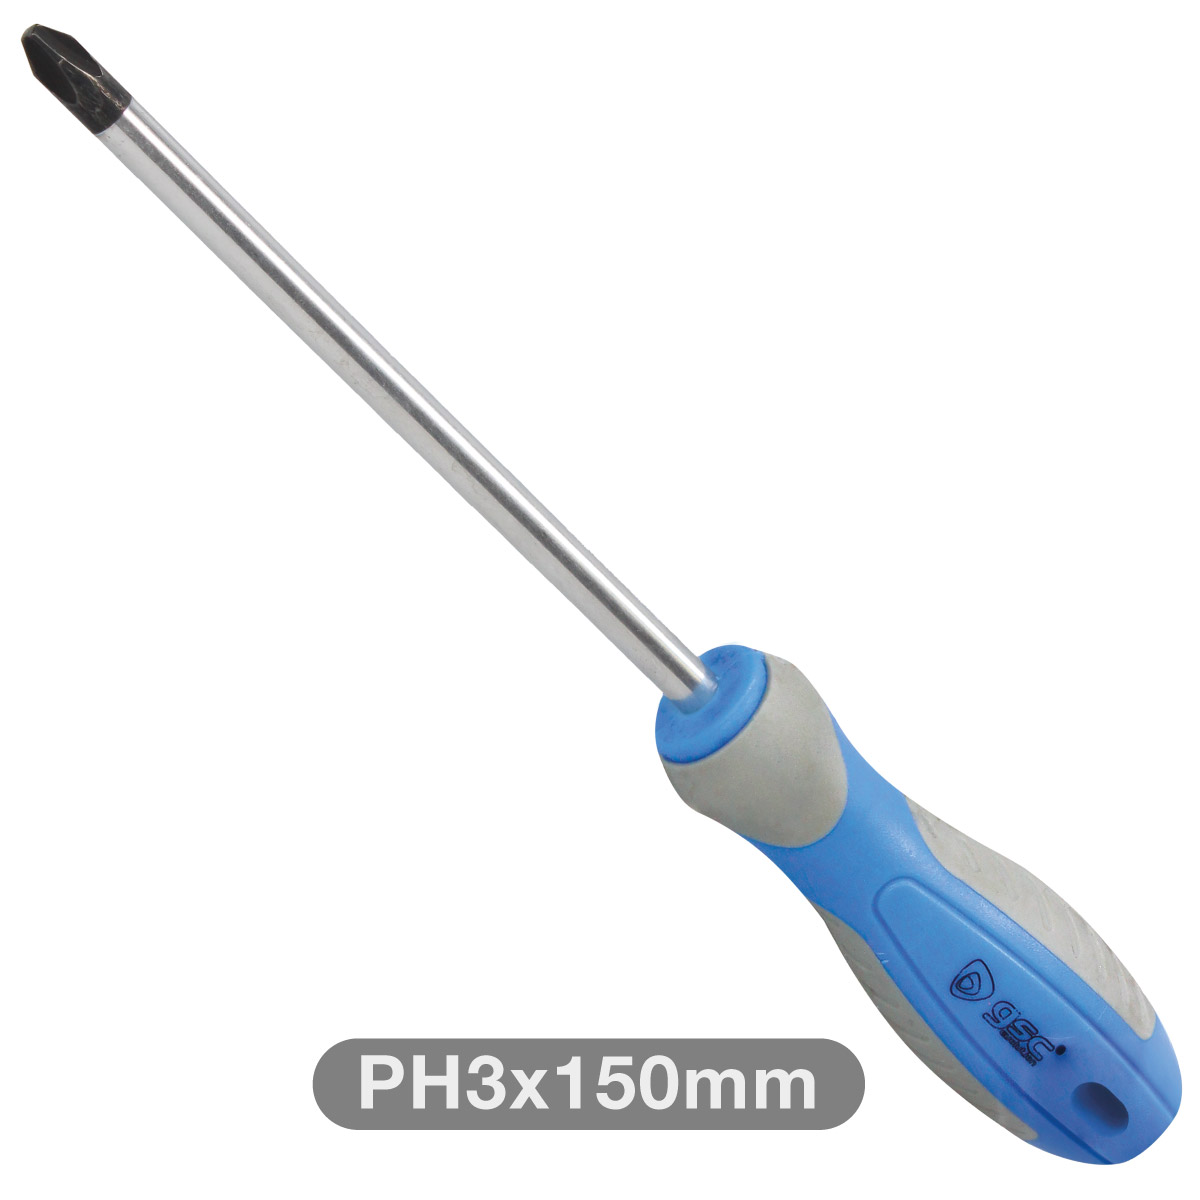 Philips screwdriver PH3x150mm